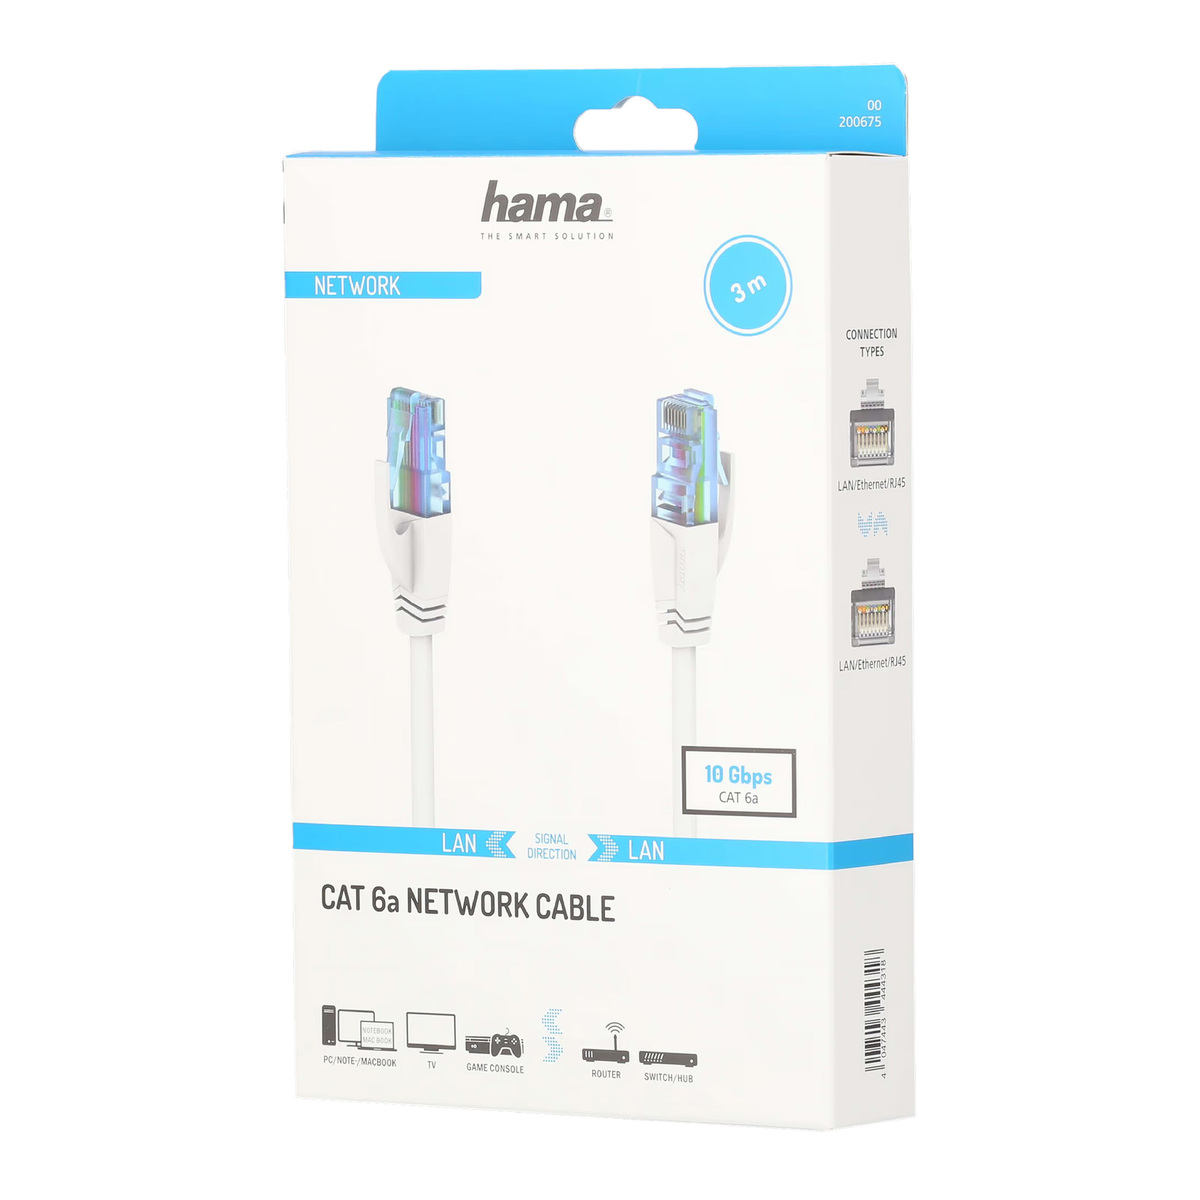 Hama Network Cable, CAT6a, U/UTP, 10 Gbit/s, 3 m, 200675